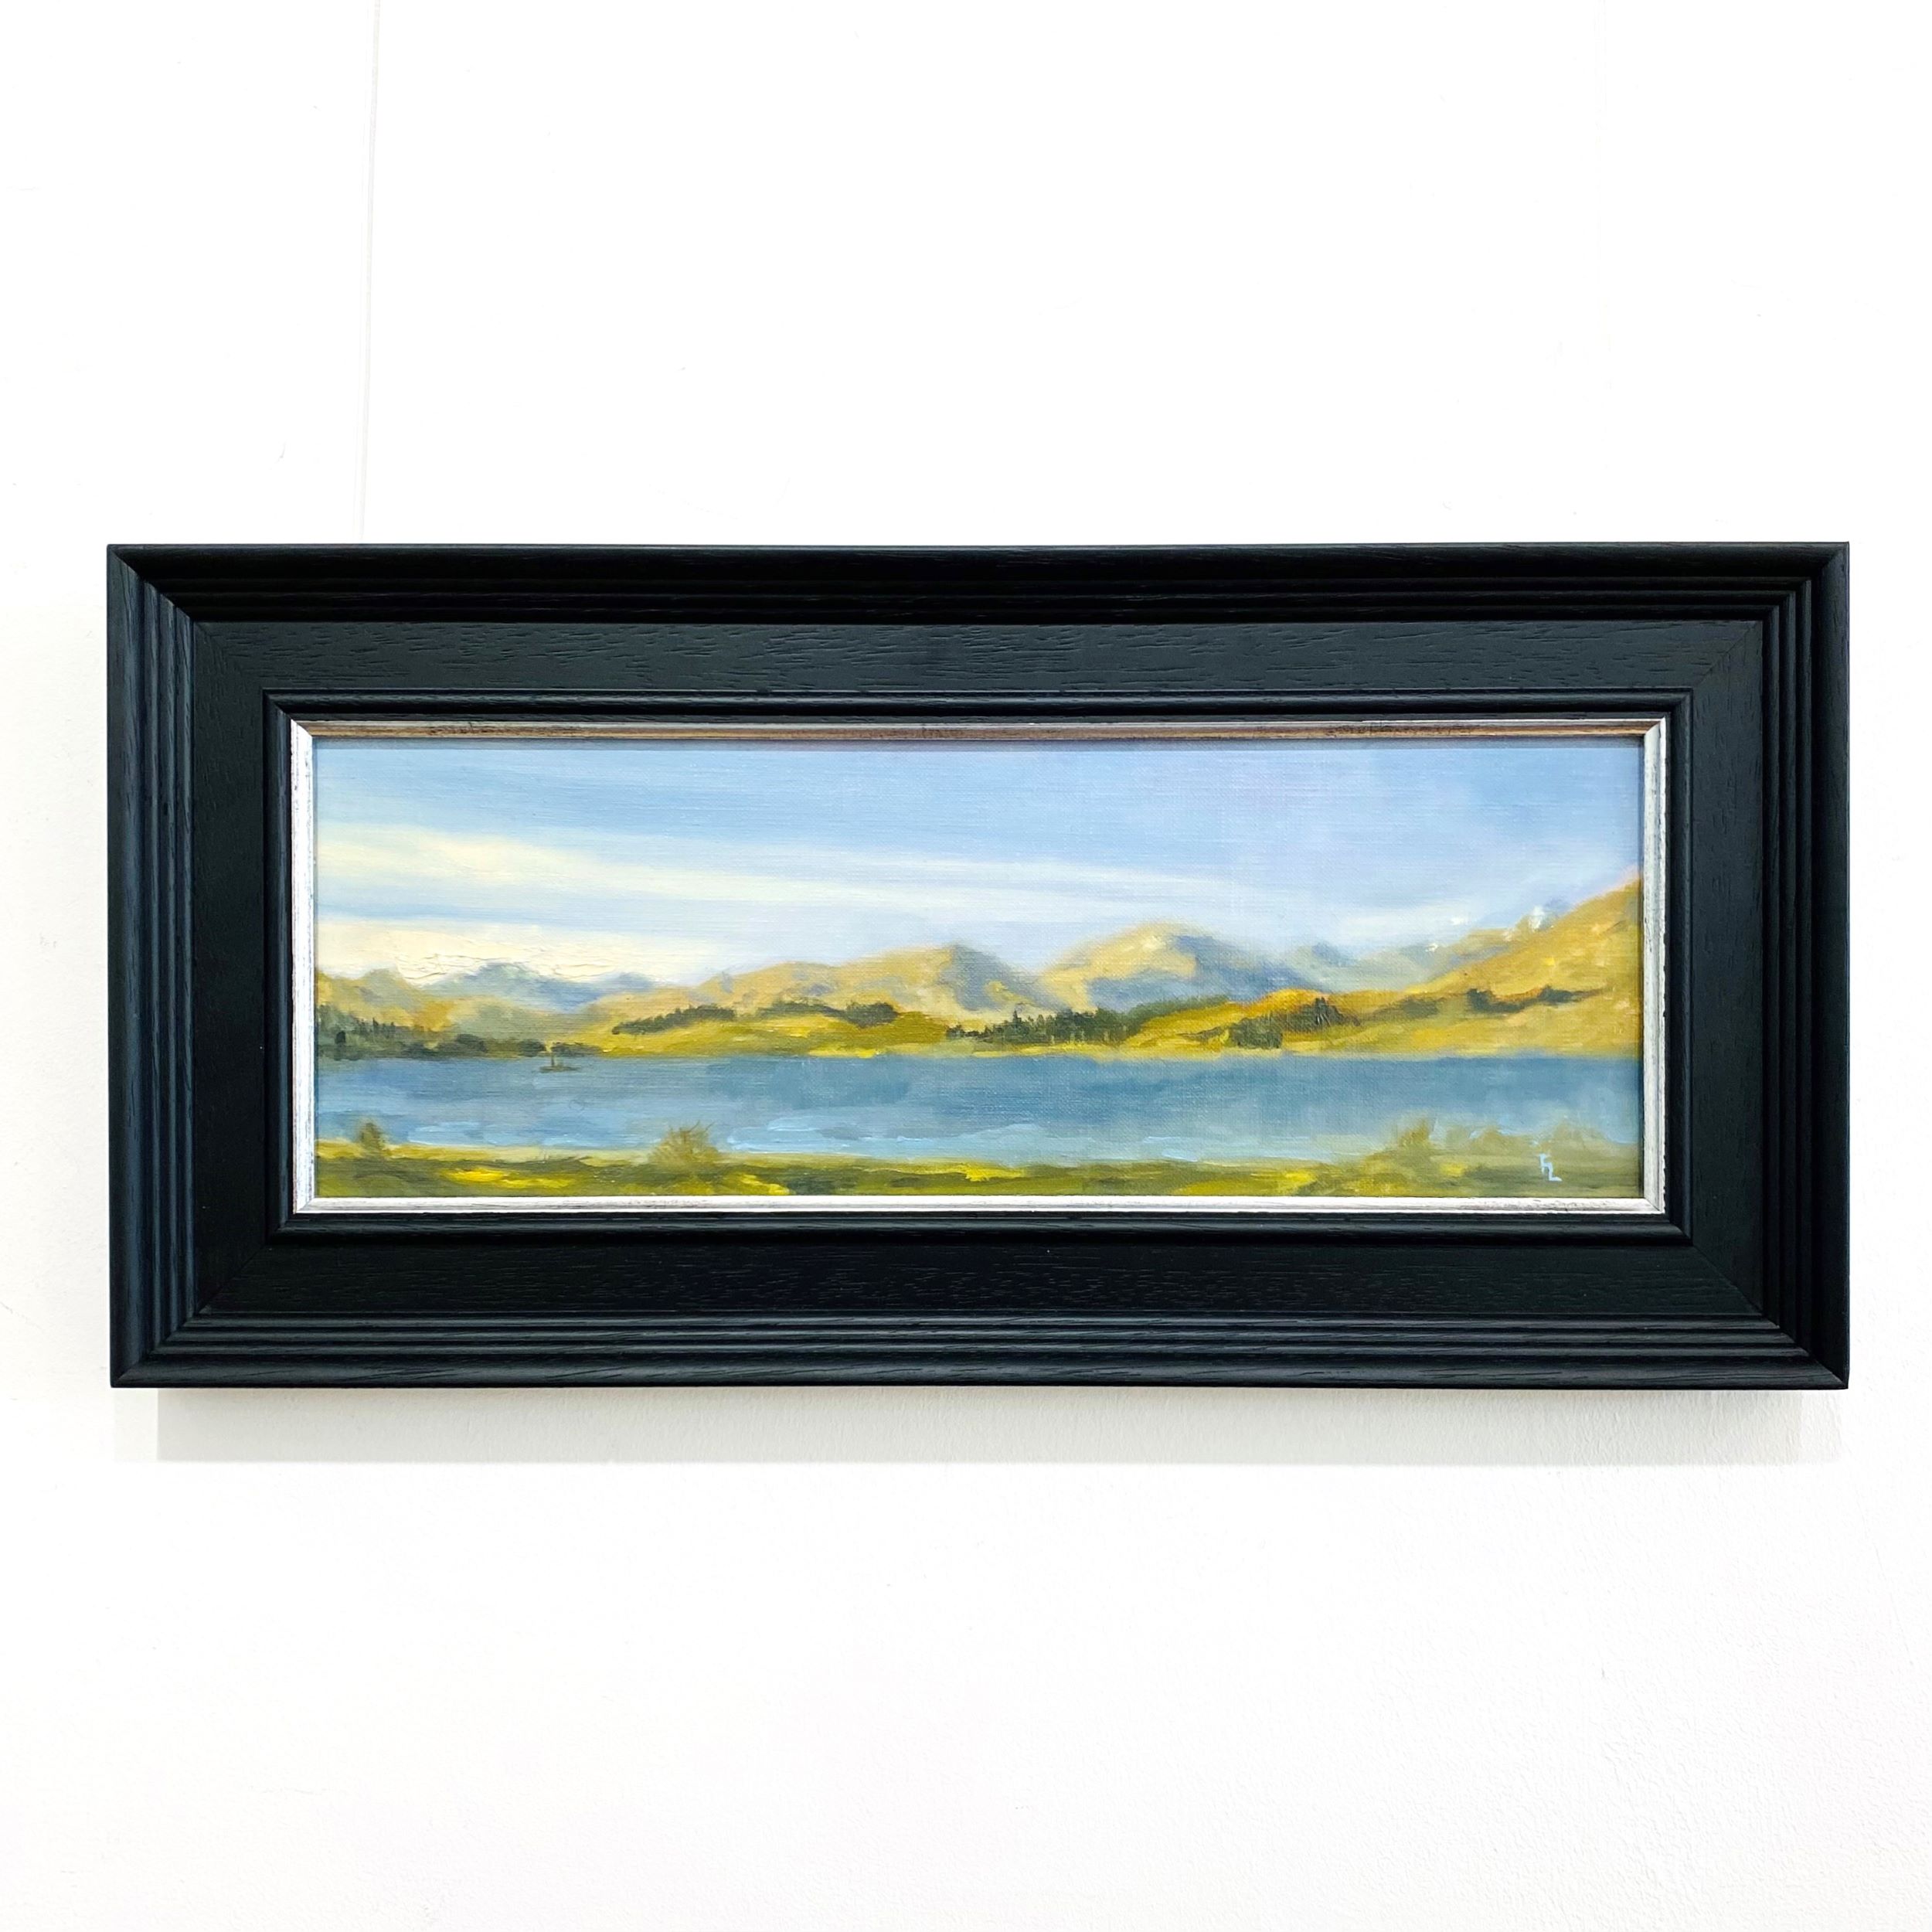 'Skyline Over Loch Tulla' by artist Fiona Longley